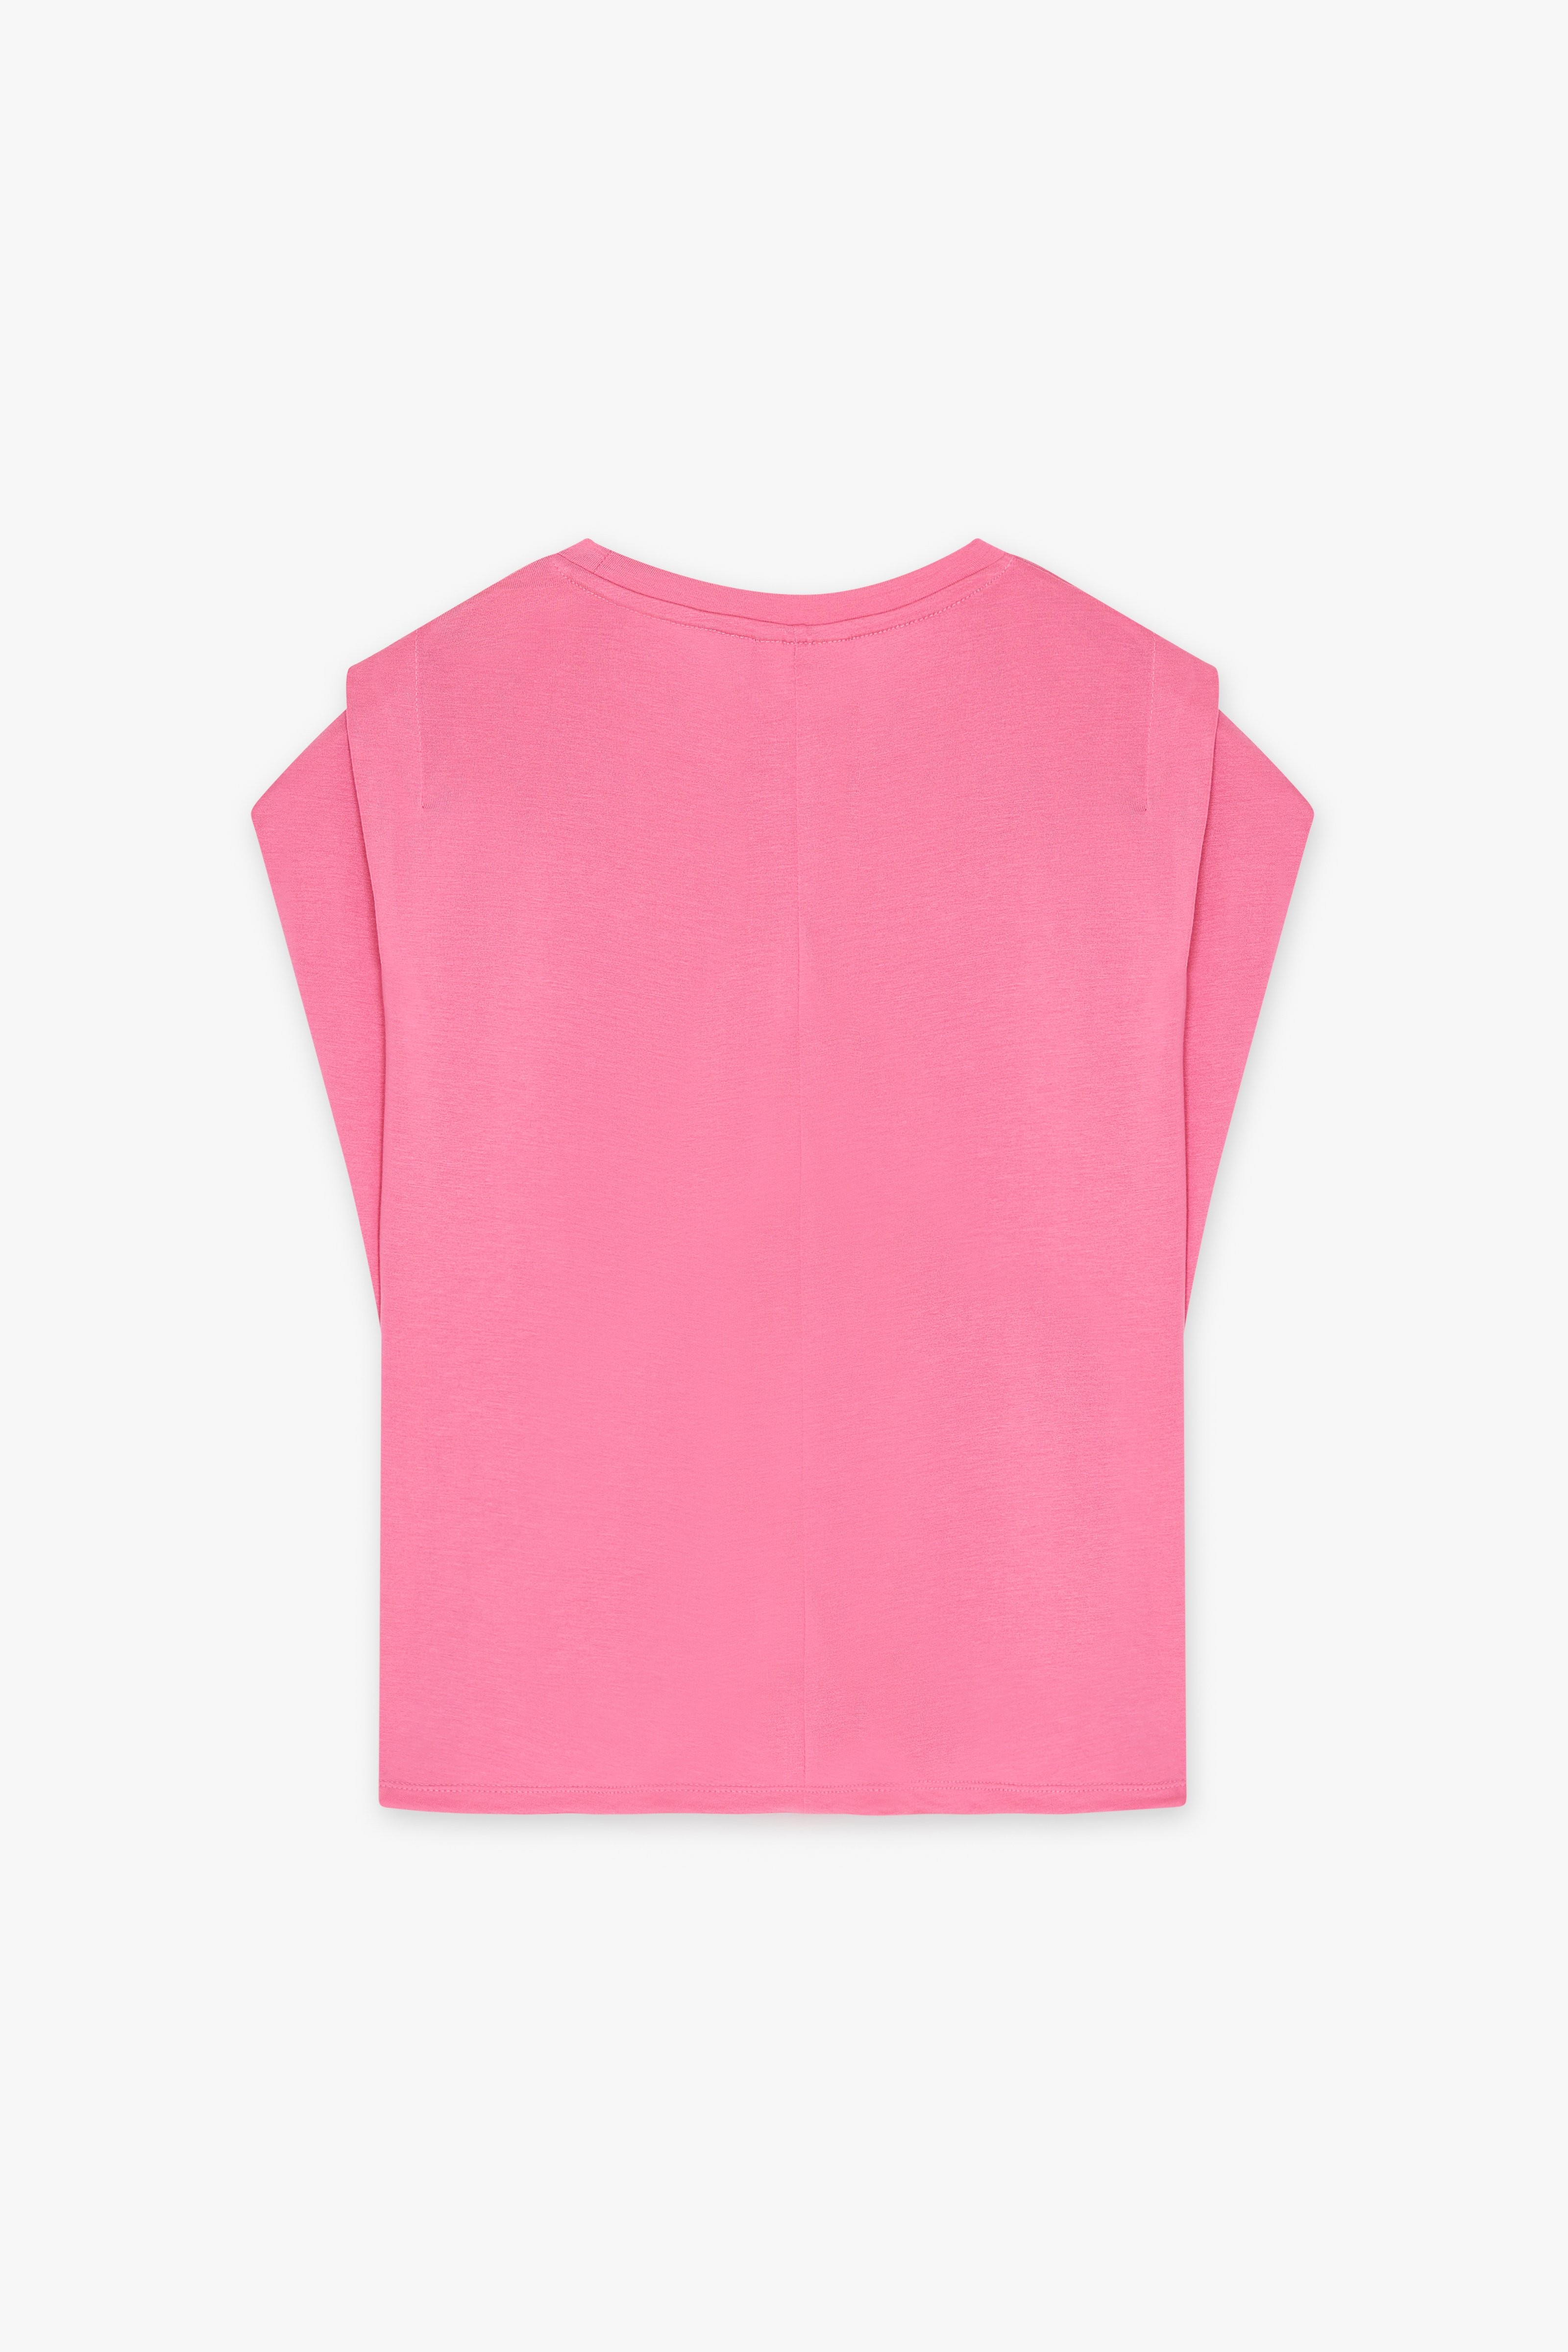 CKS Dames - PAMINA - t-shirt korte mouwen - intens roze